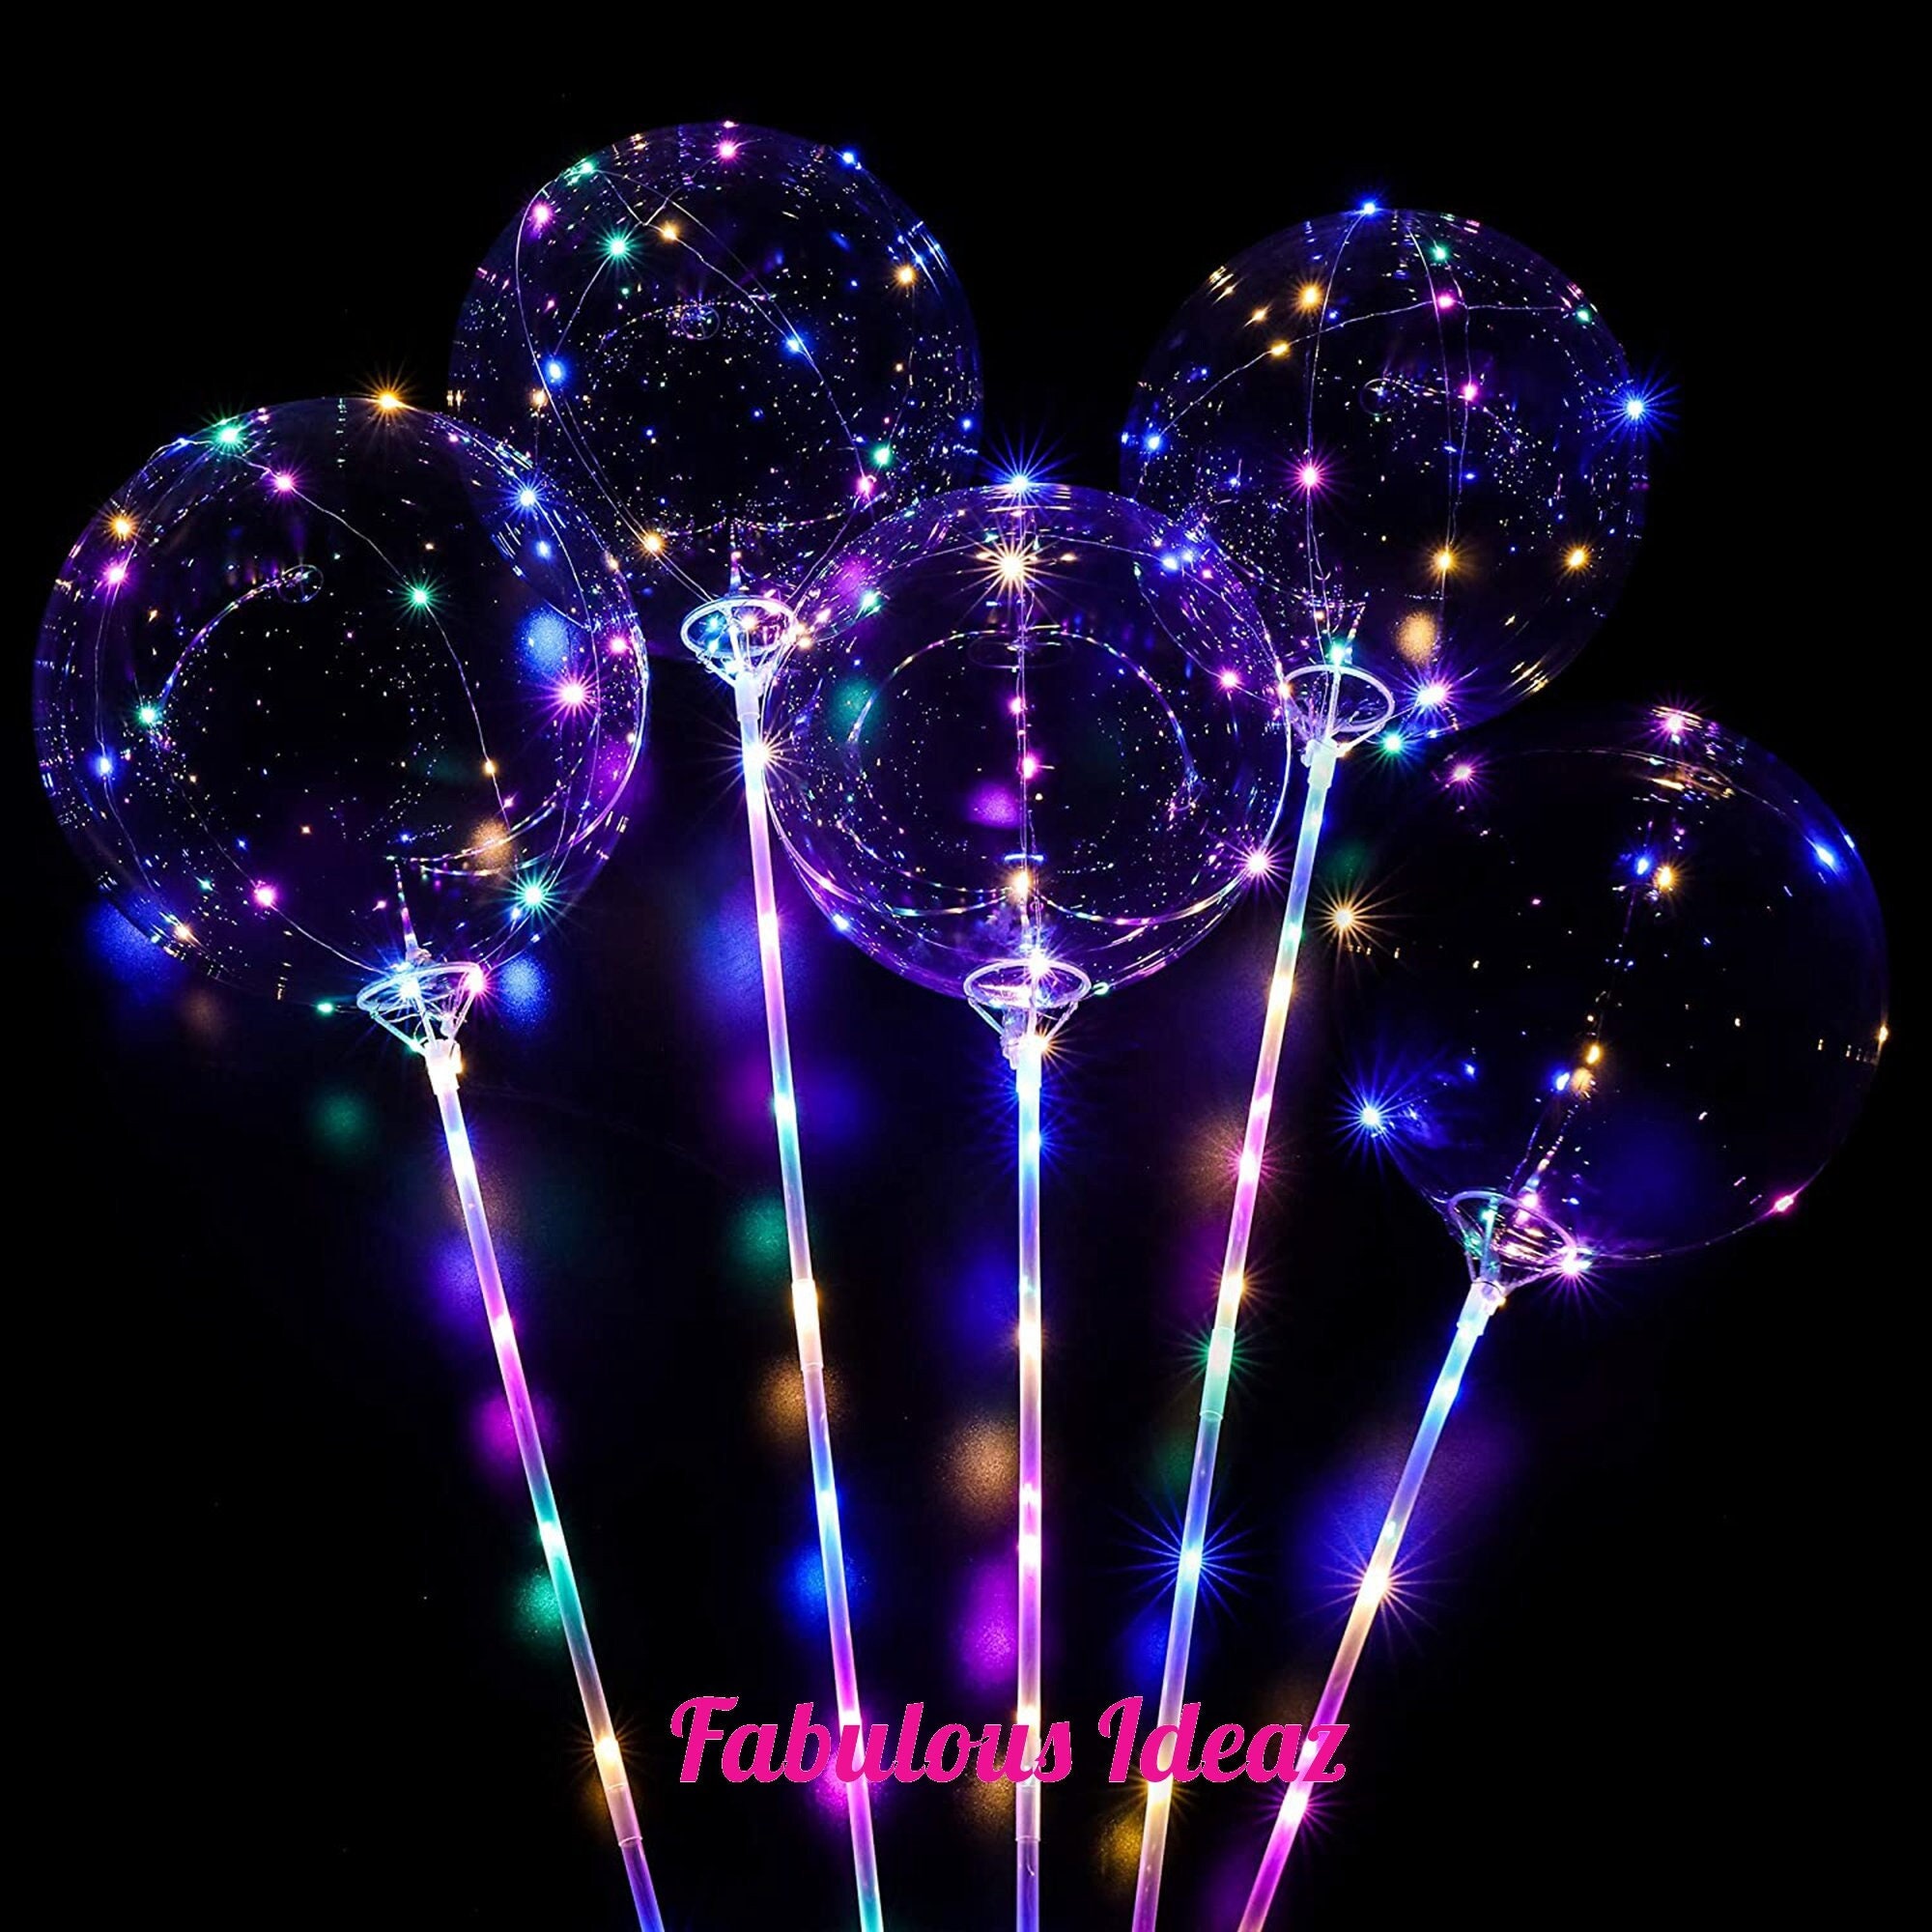 Ballons LED - Achat Ballons lumineux x10 - Blanc pas cher